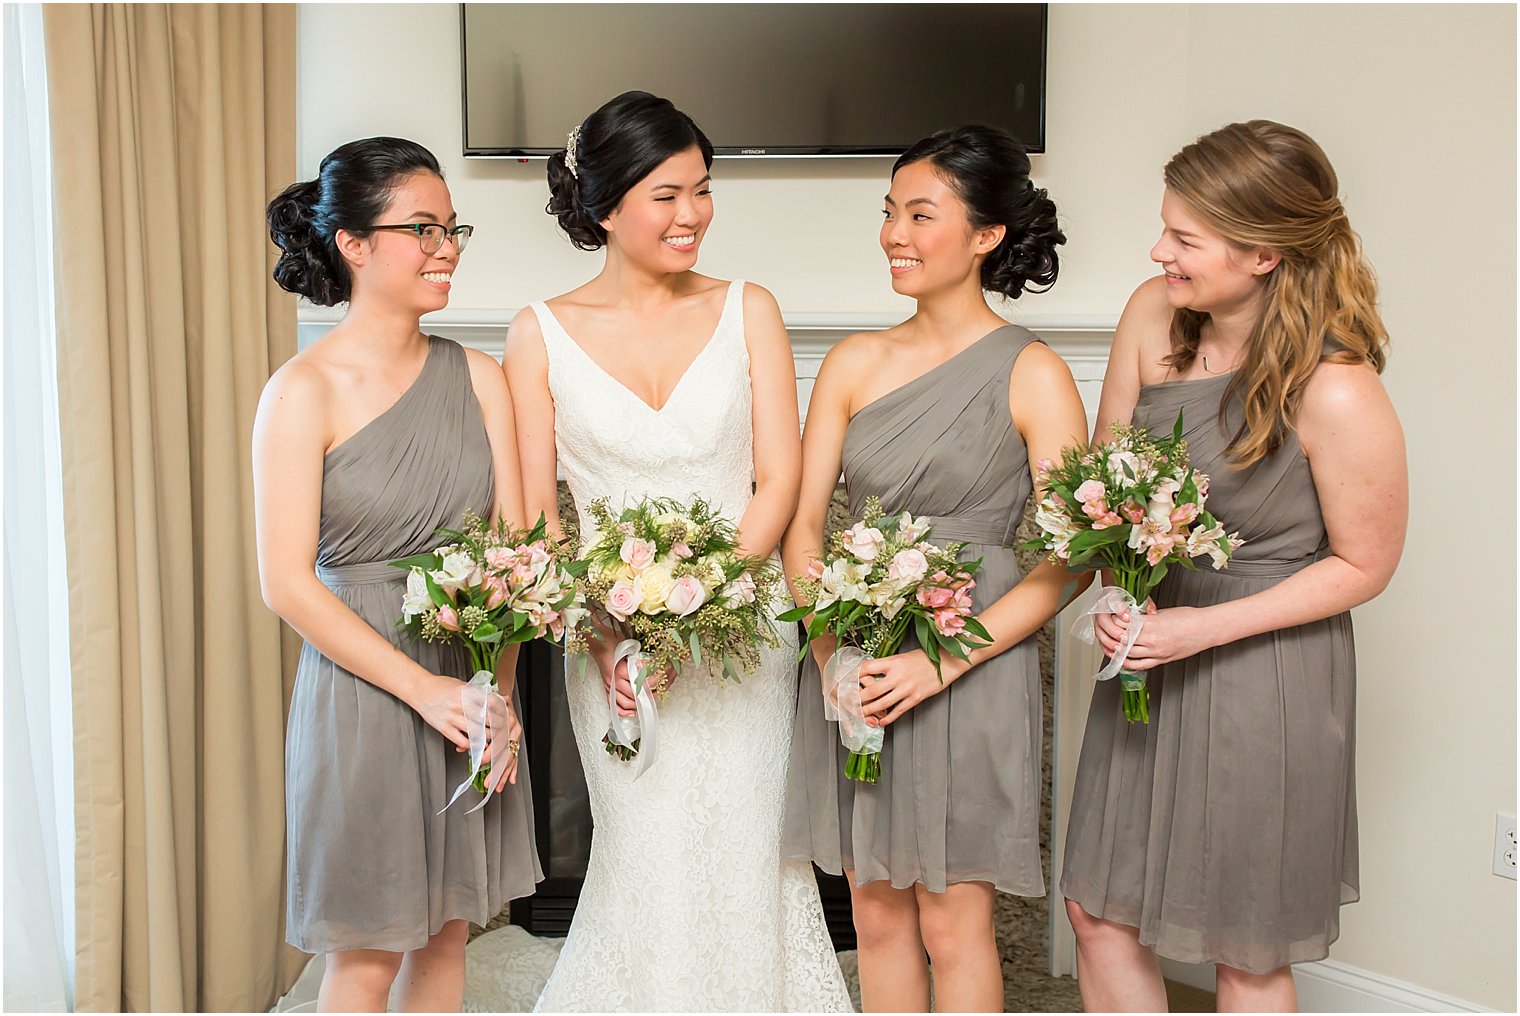 Brides in gray dresses